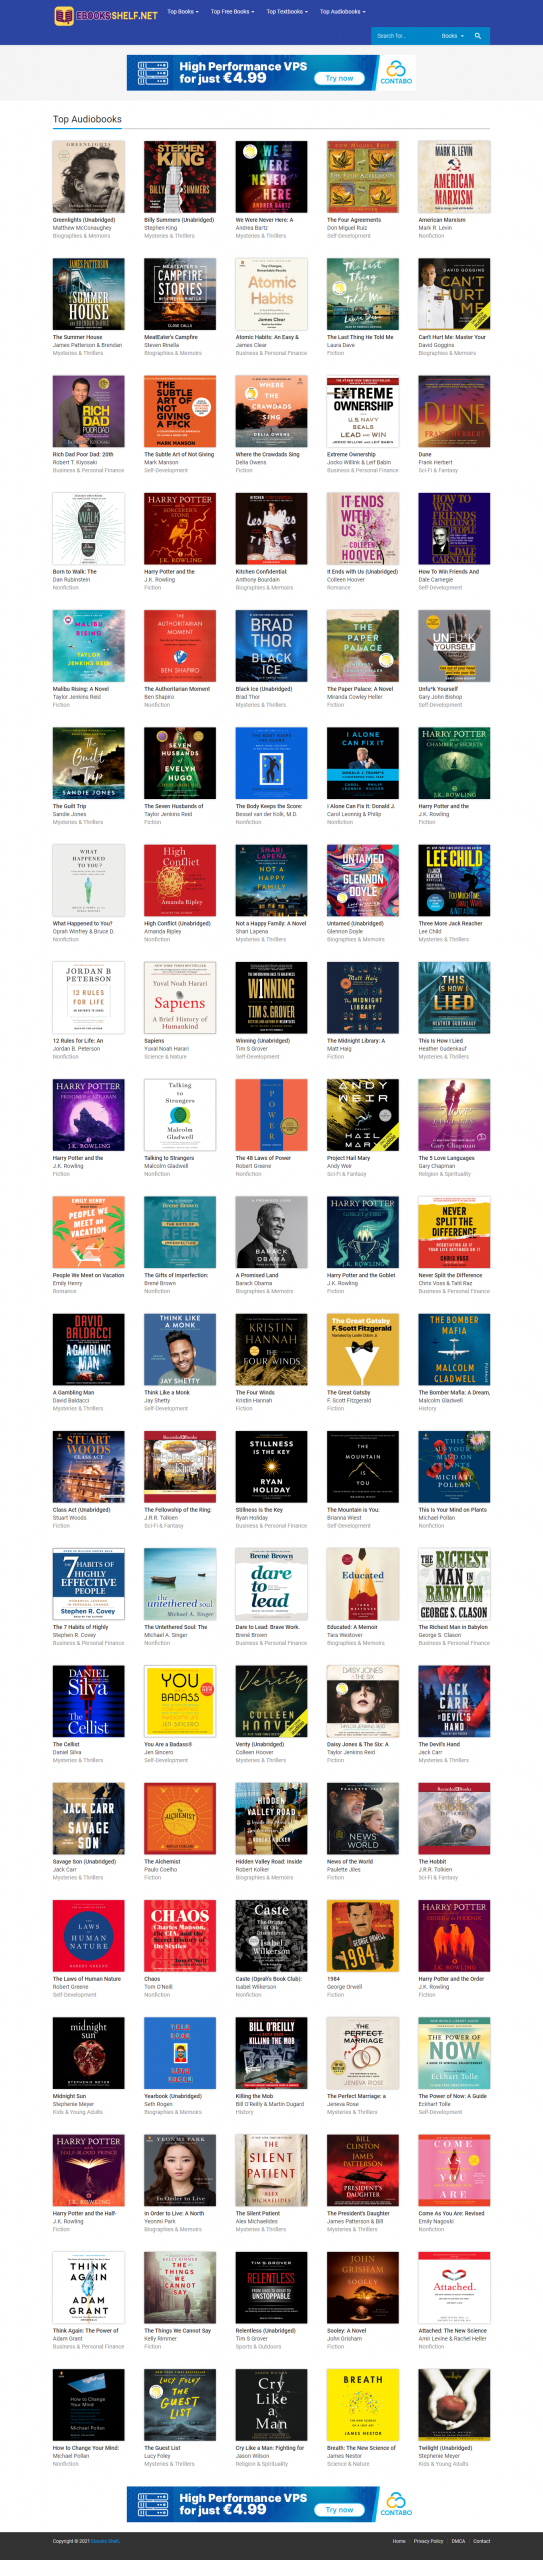 Top Audiobooks - Ebooks Shelfprotechhut.com